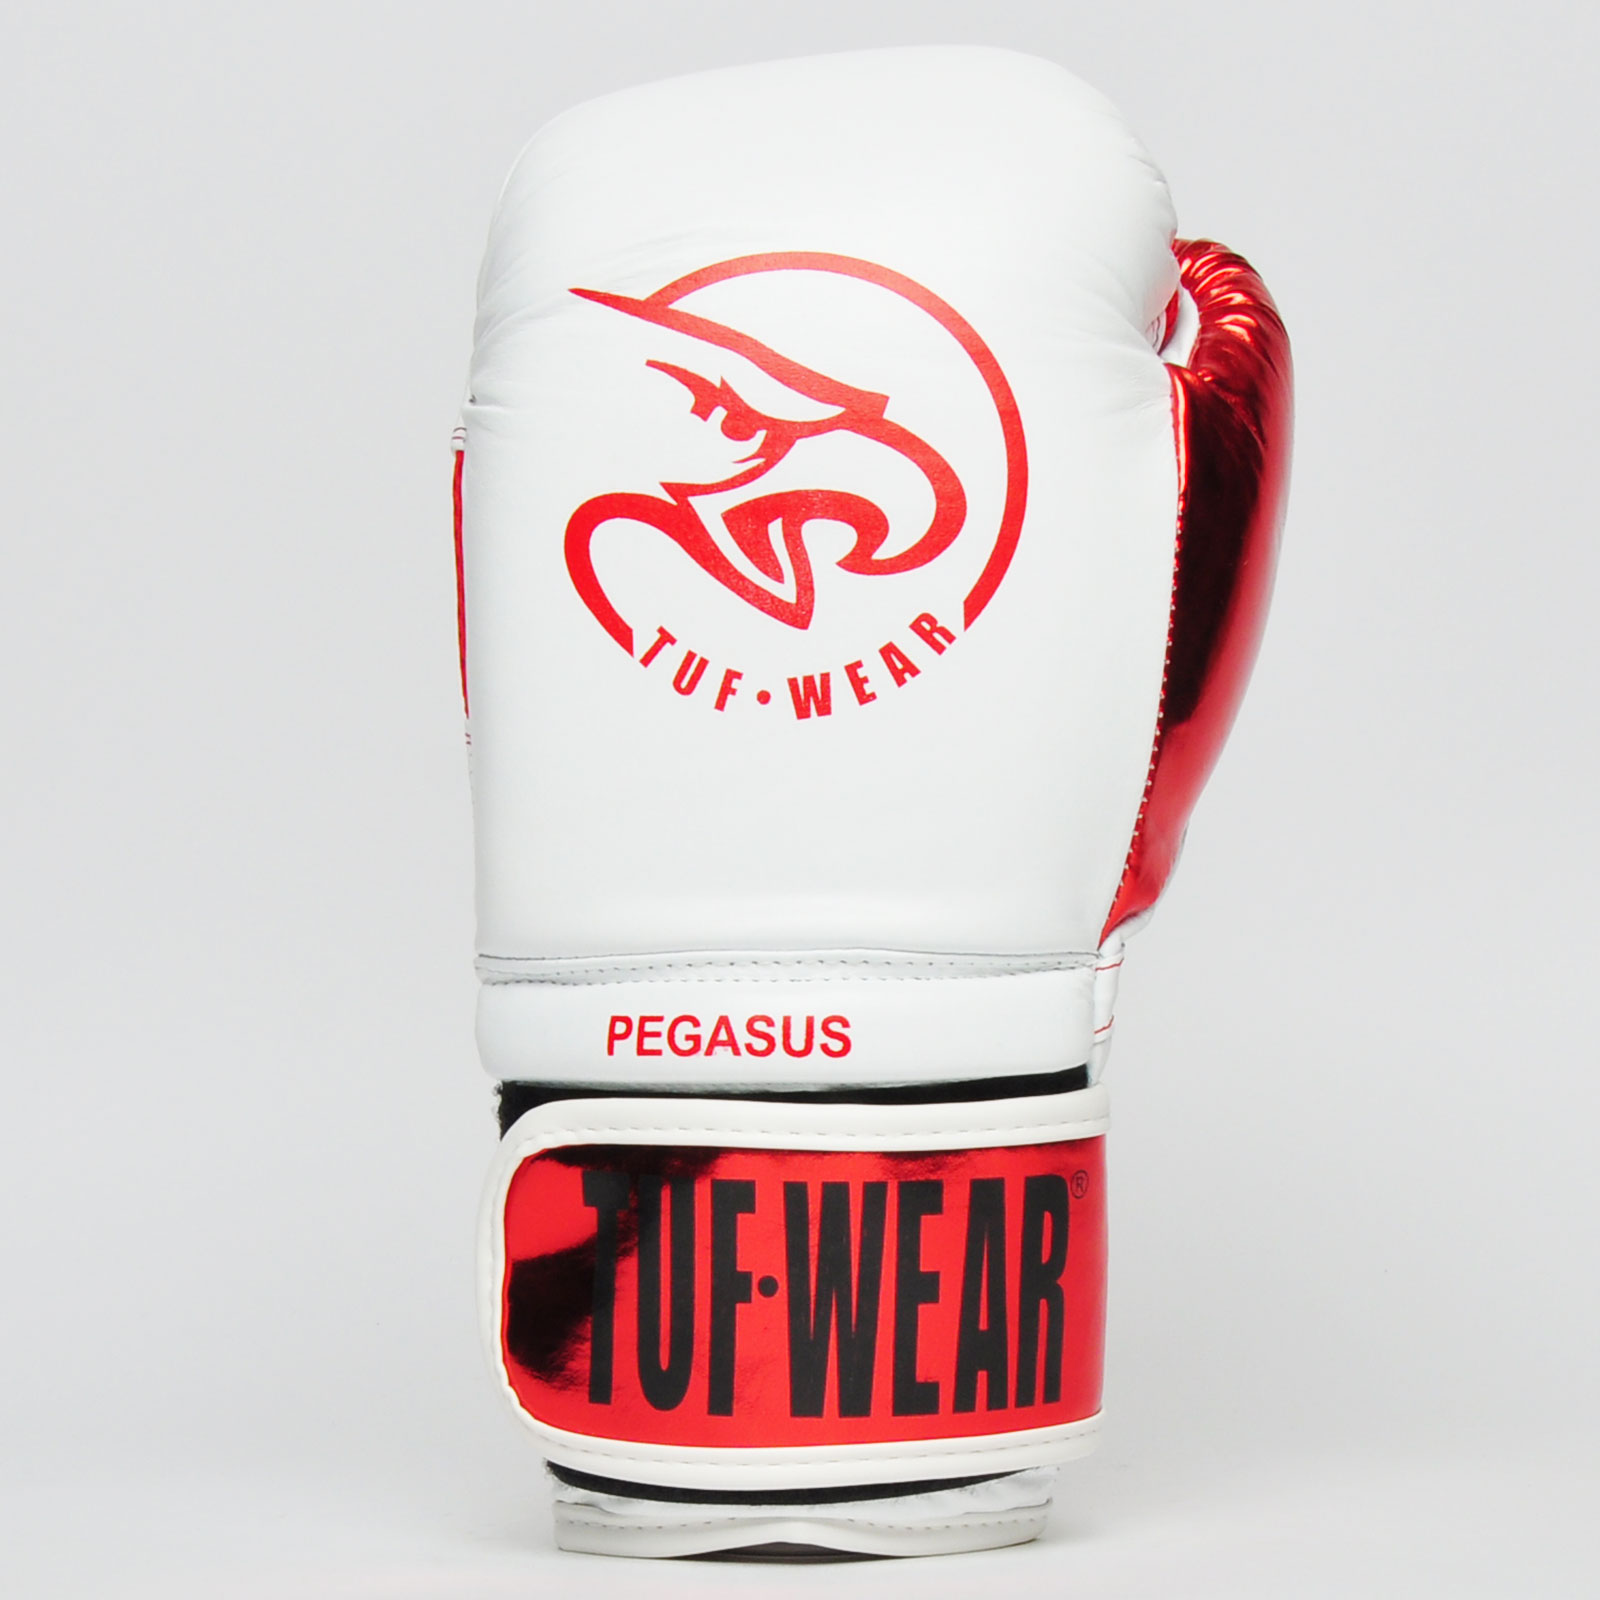 Download Tuf Wear Pegasus Leather Glove - Tuf Wear Direct Ltd